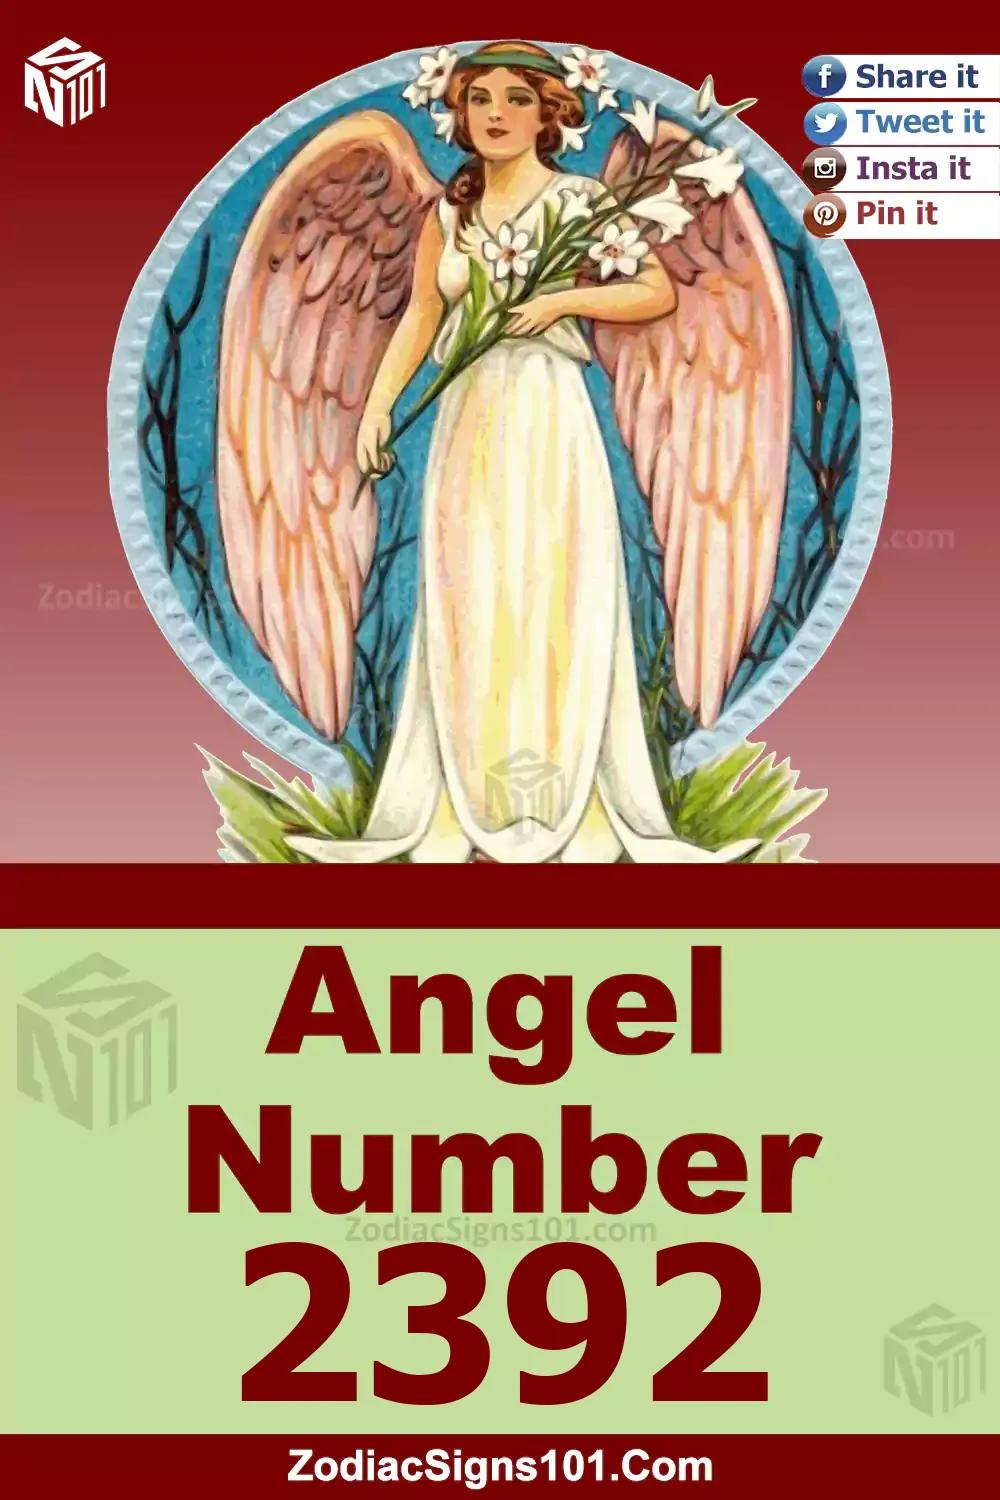 2392-Angel-Number-Meaning.jpg